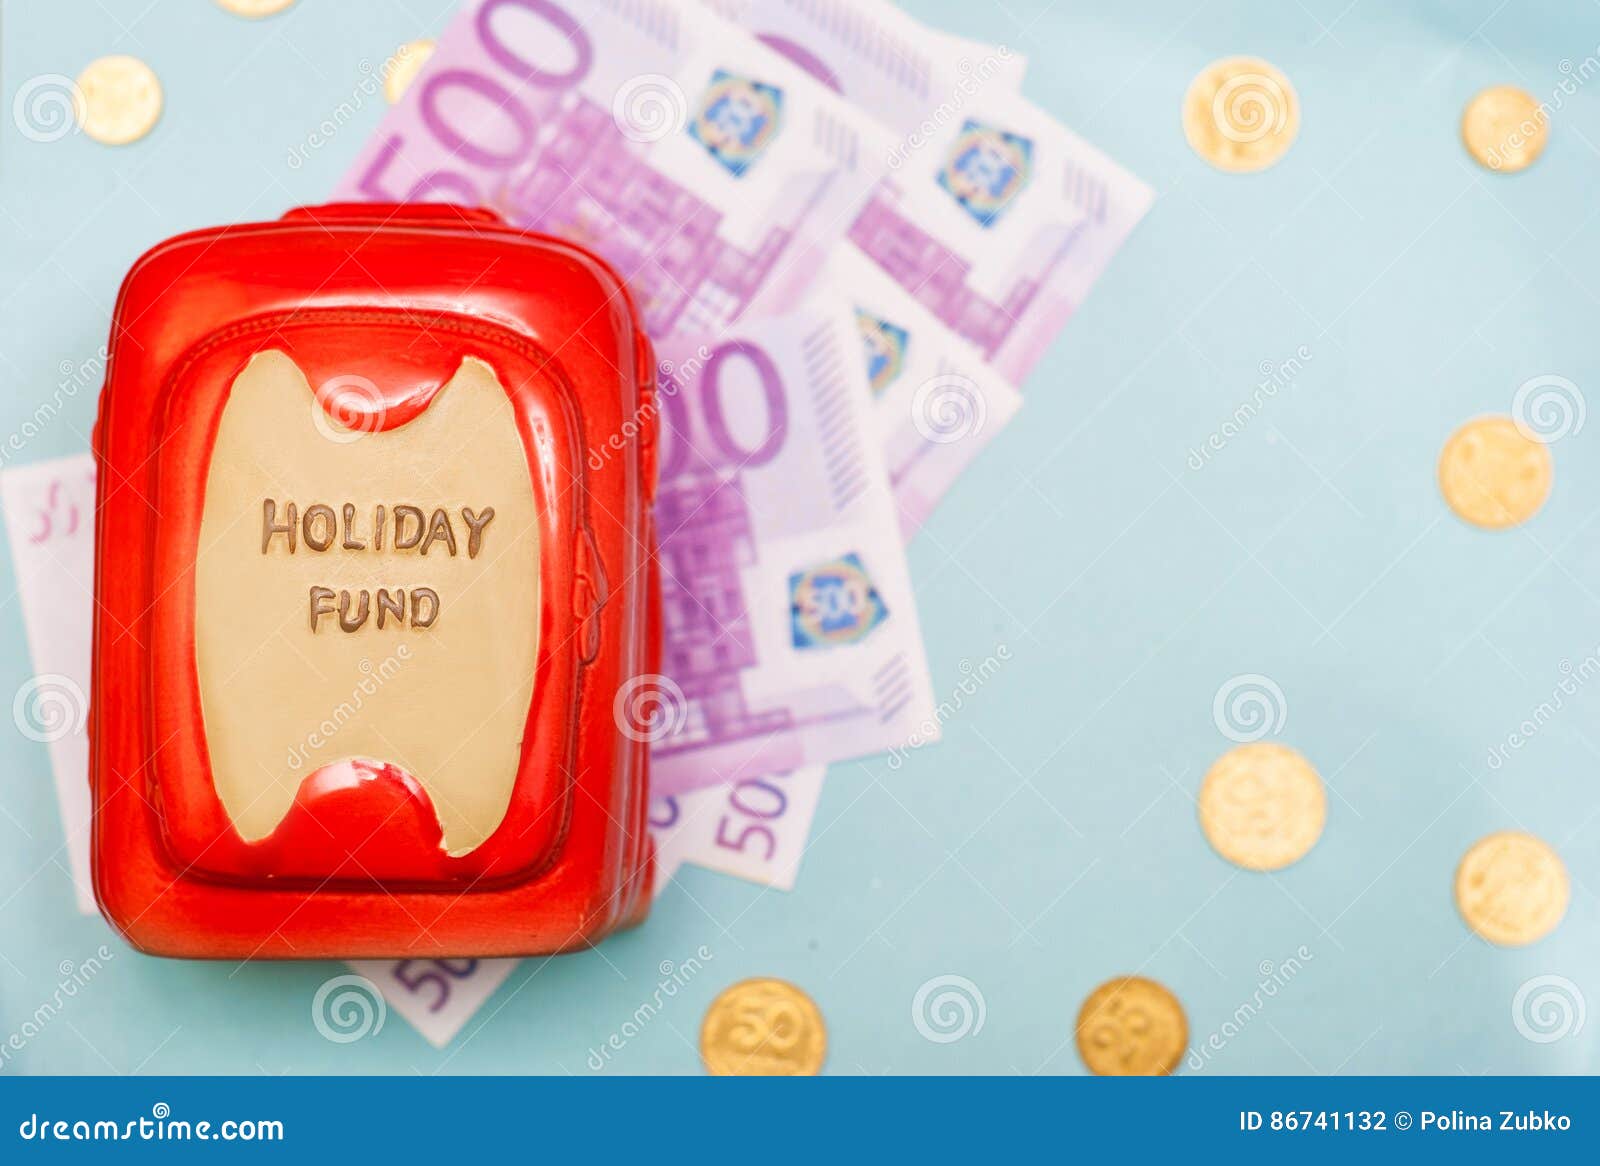 travel budget - vacation money savings in money box.